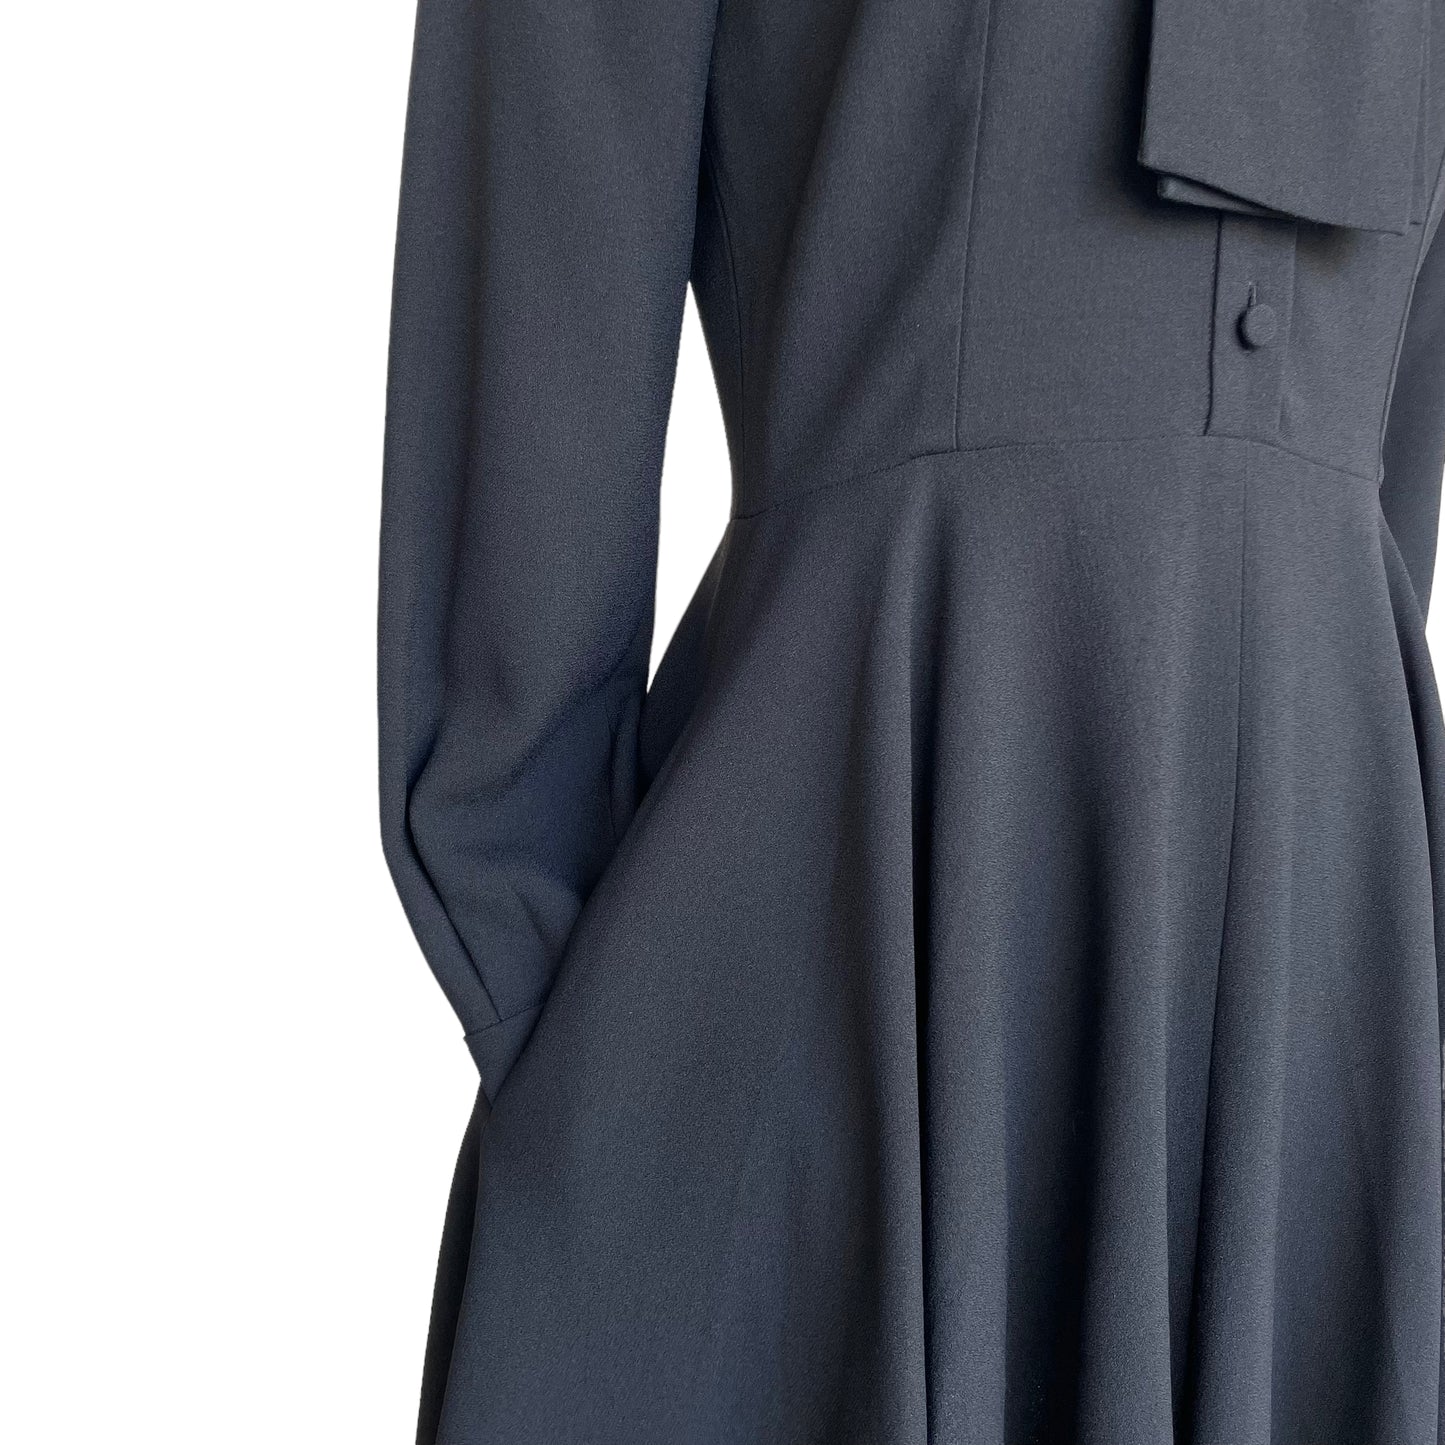 Black Long Sleeve Button Up Dress - S